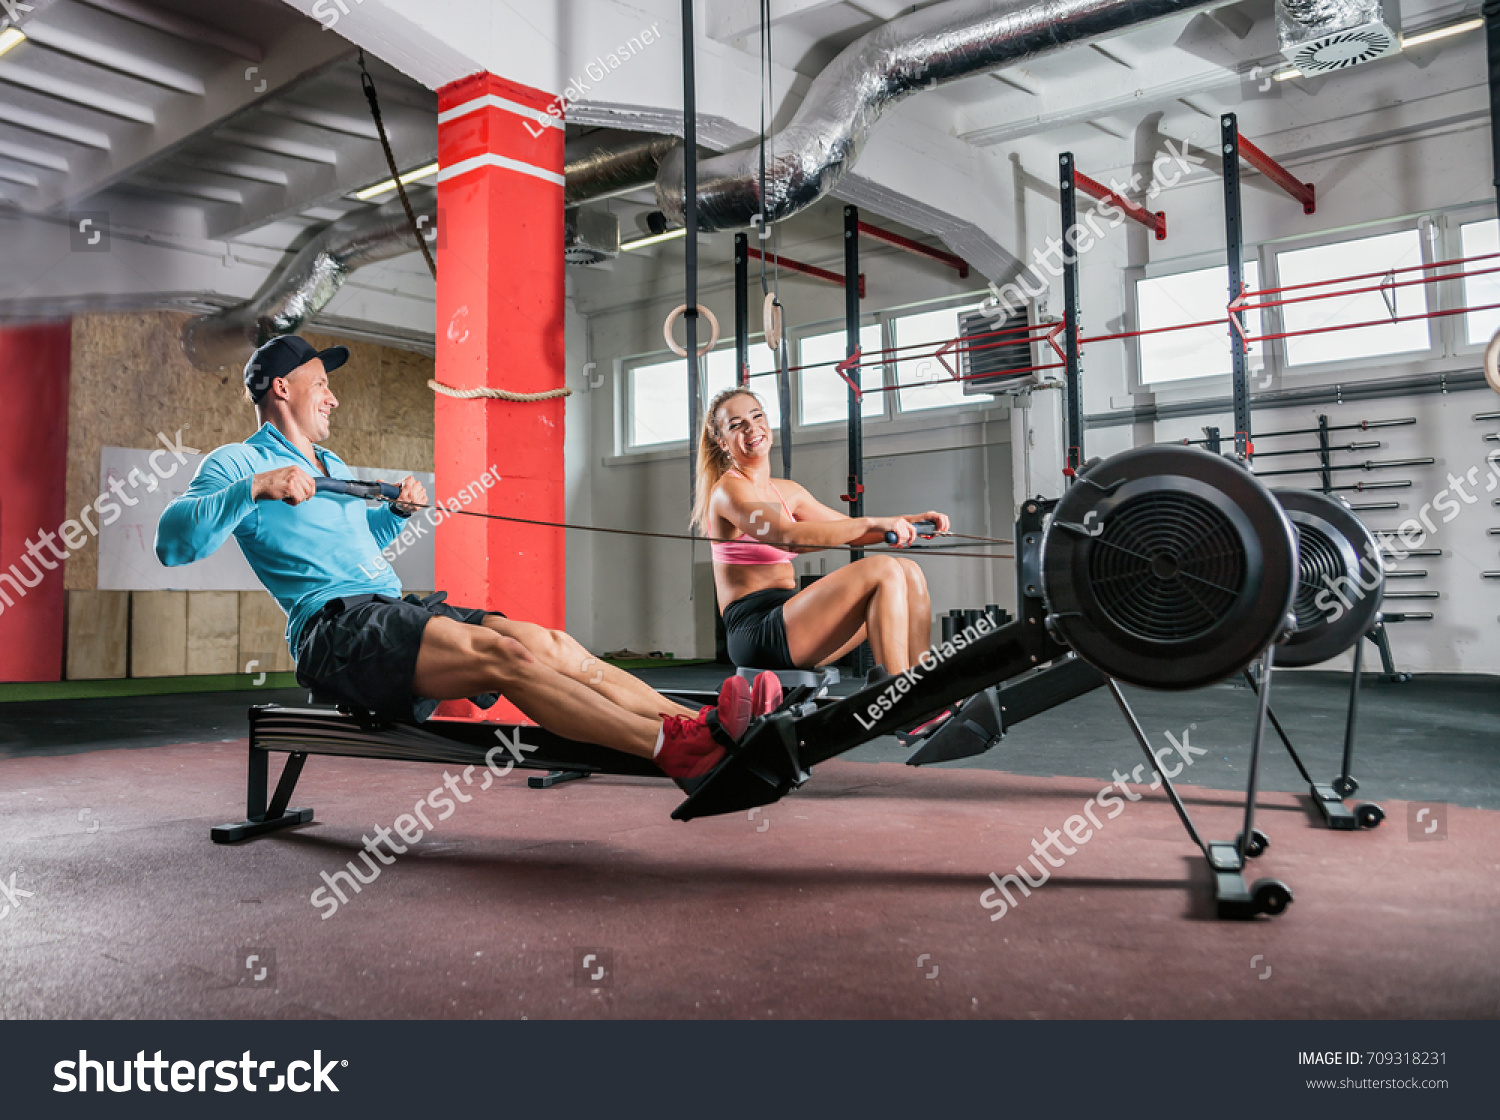 117 Fat woman row machine Images, Stock Photos & Vectors | Shutterstock